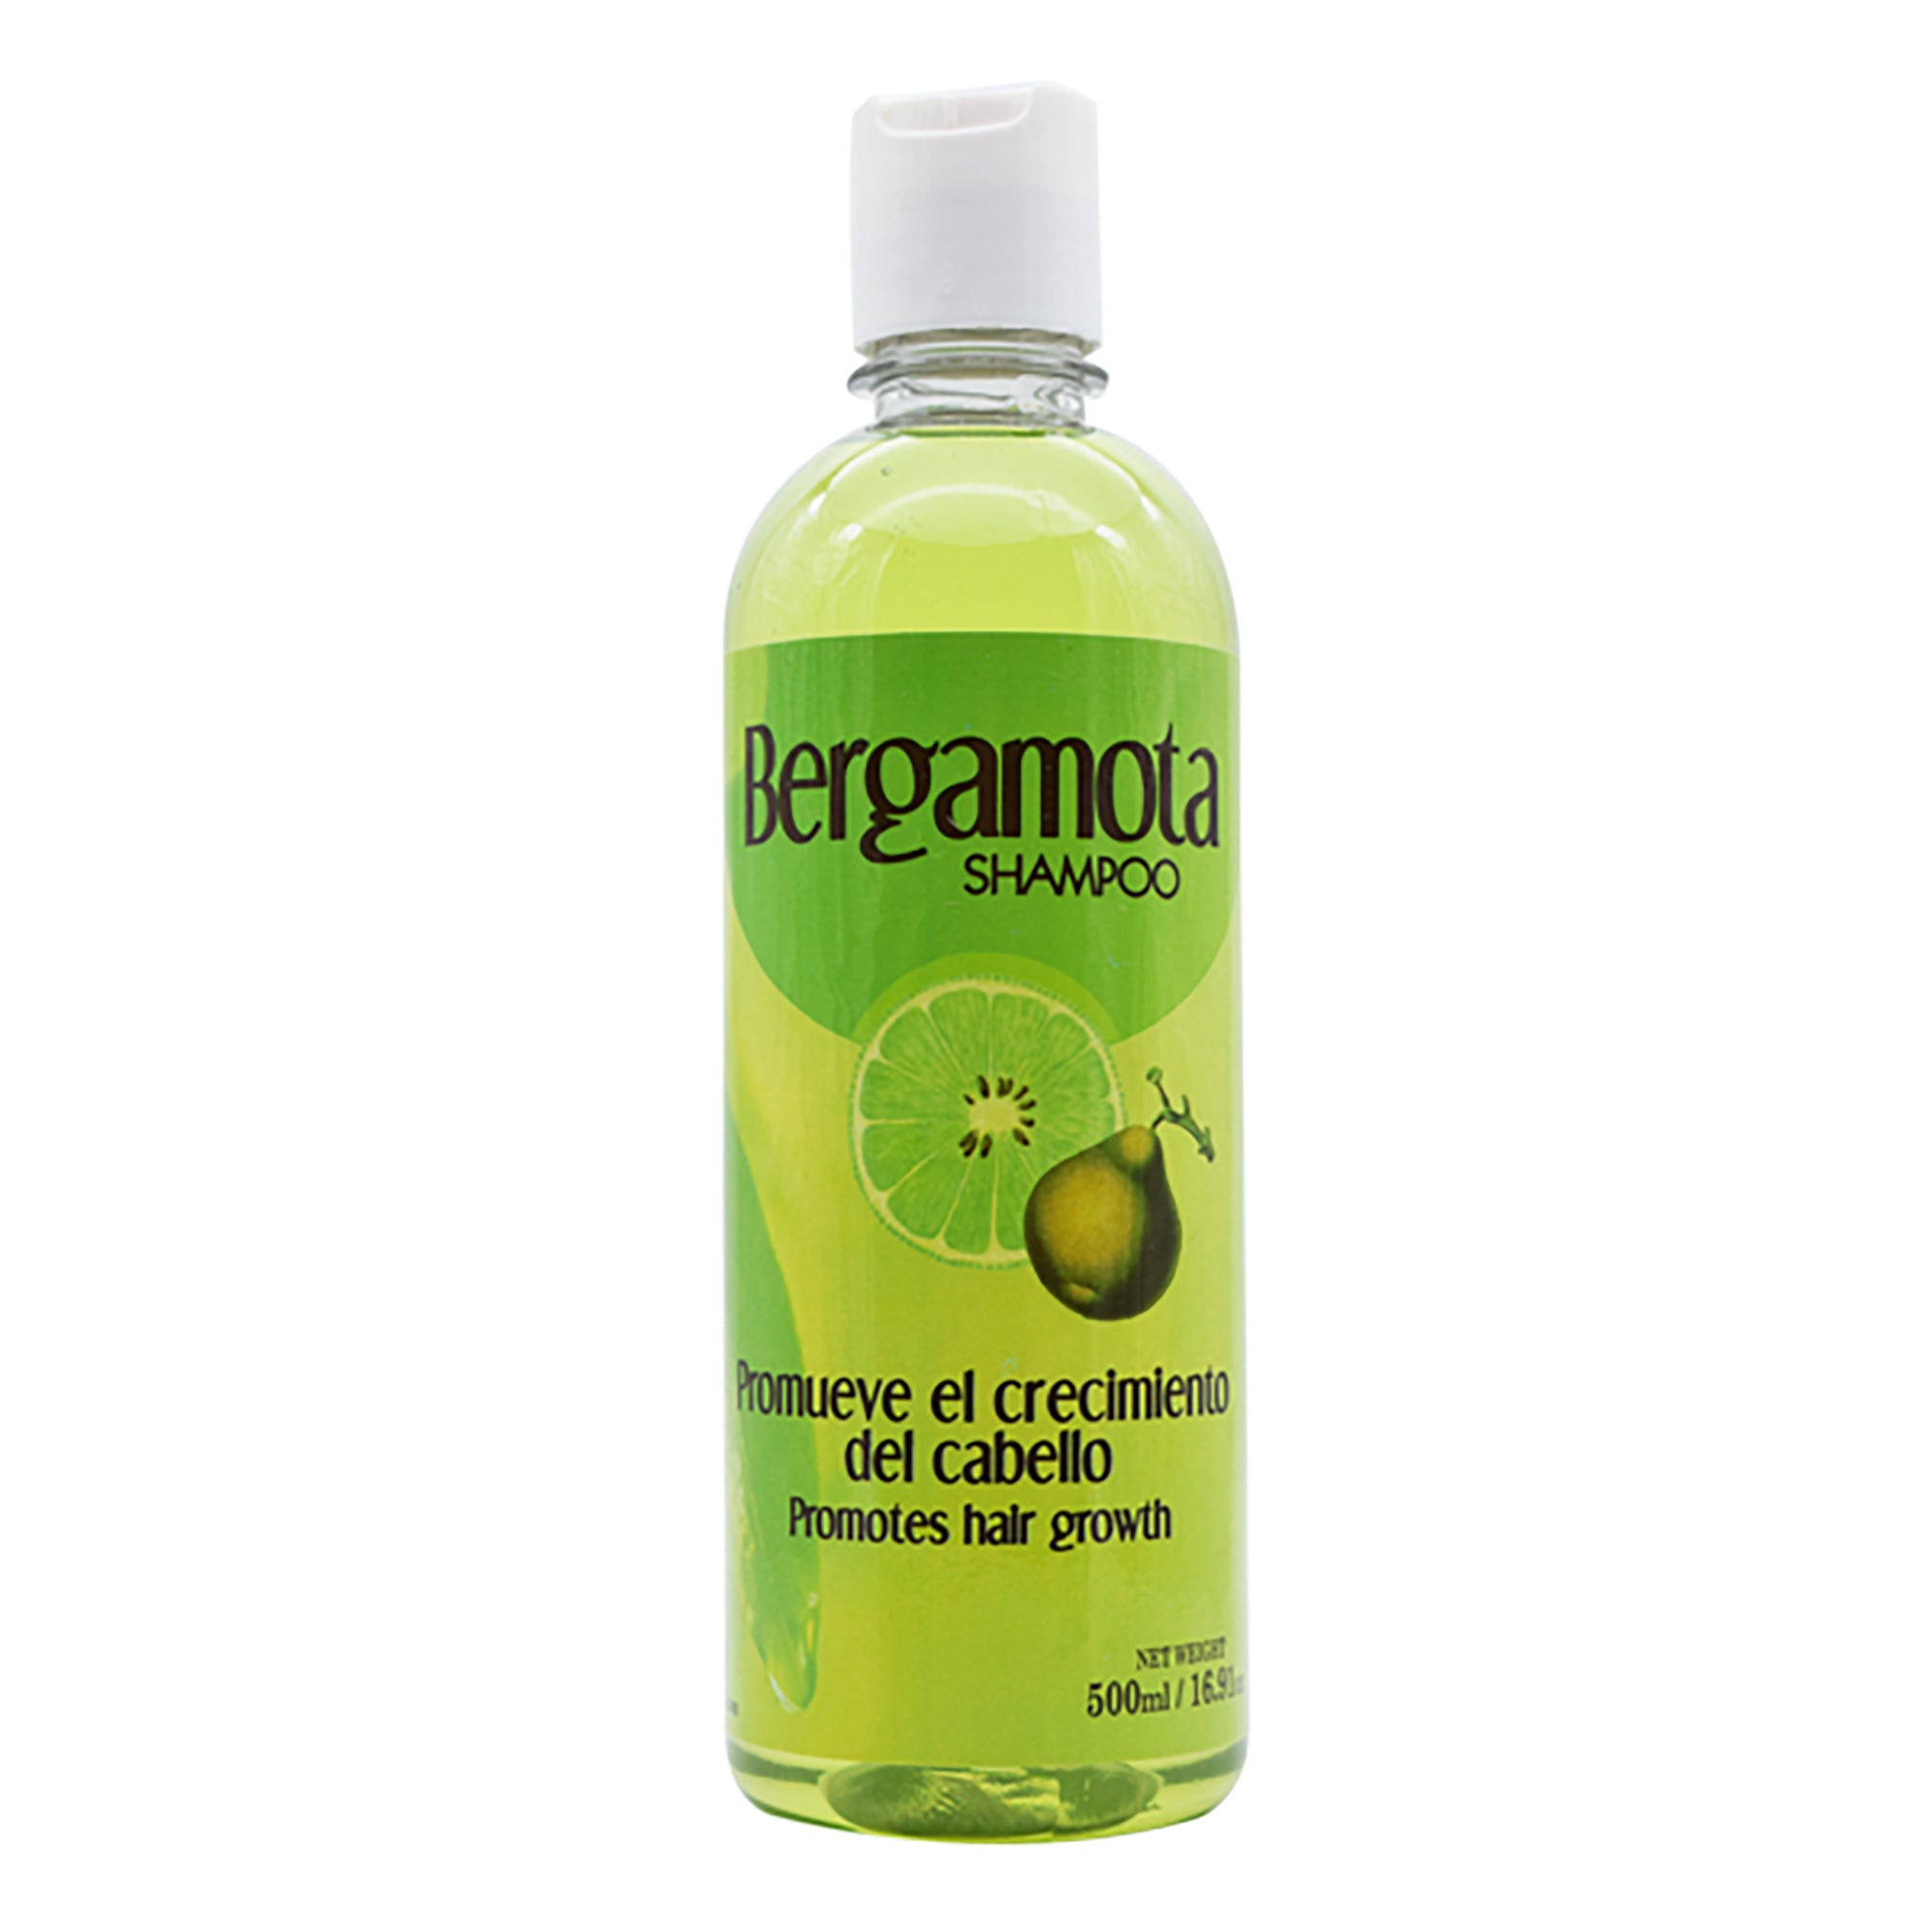 Shampoo bergamota 500 ml